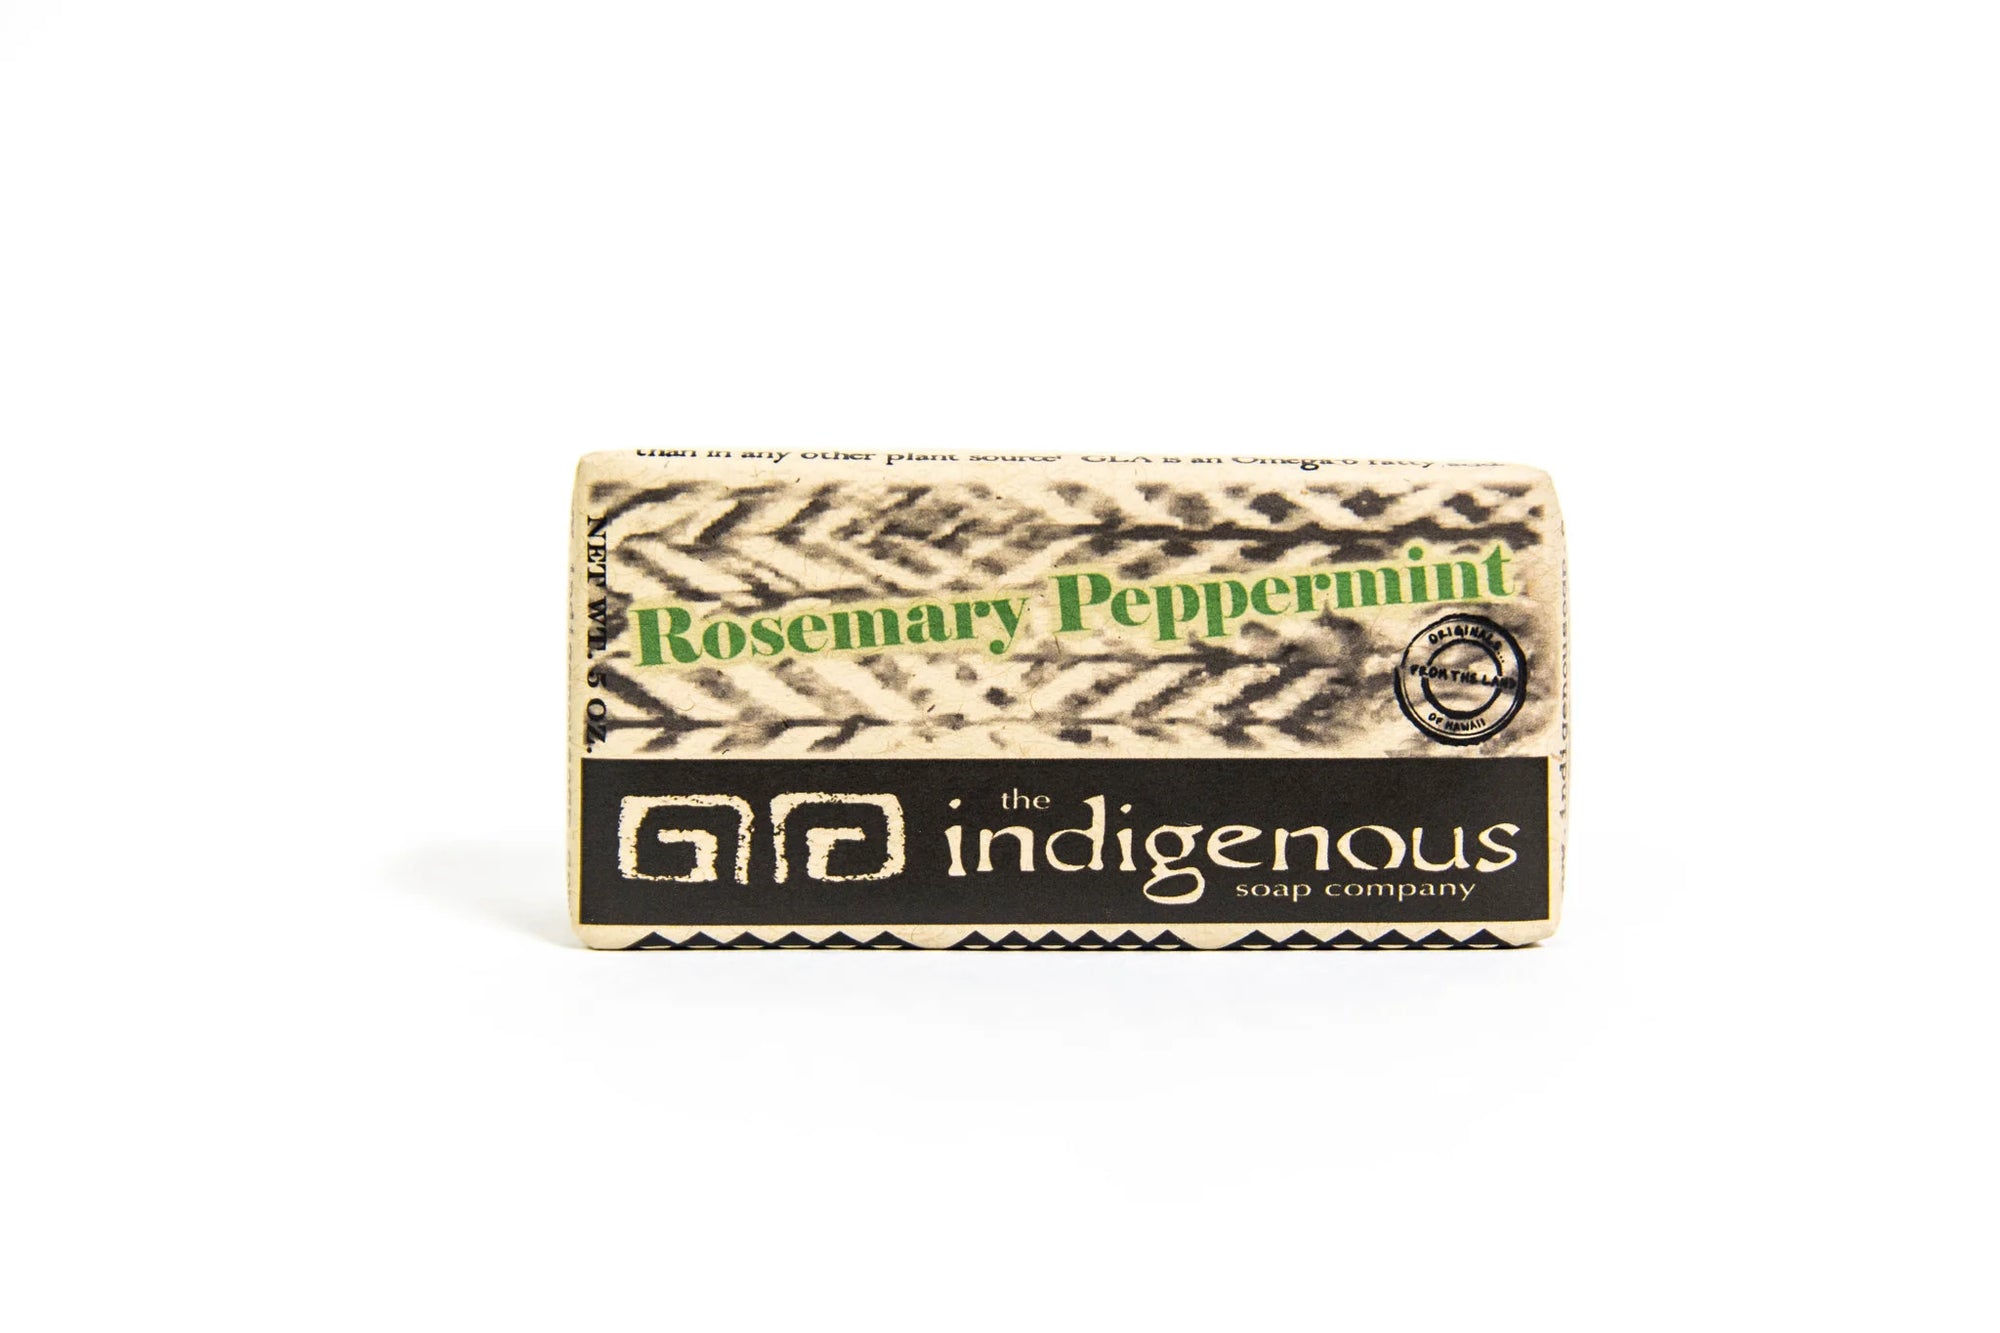 Pop-Up Mākeke - The Indigenous Soap Company - Rosemary Peppermint Soap Bar